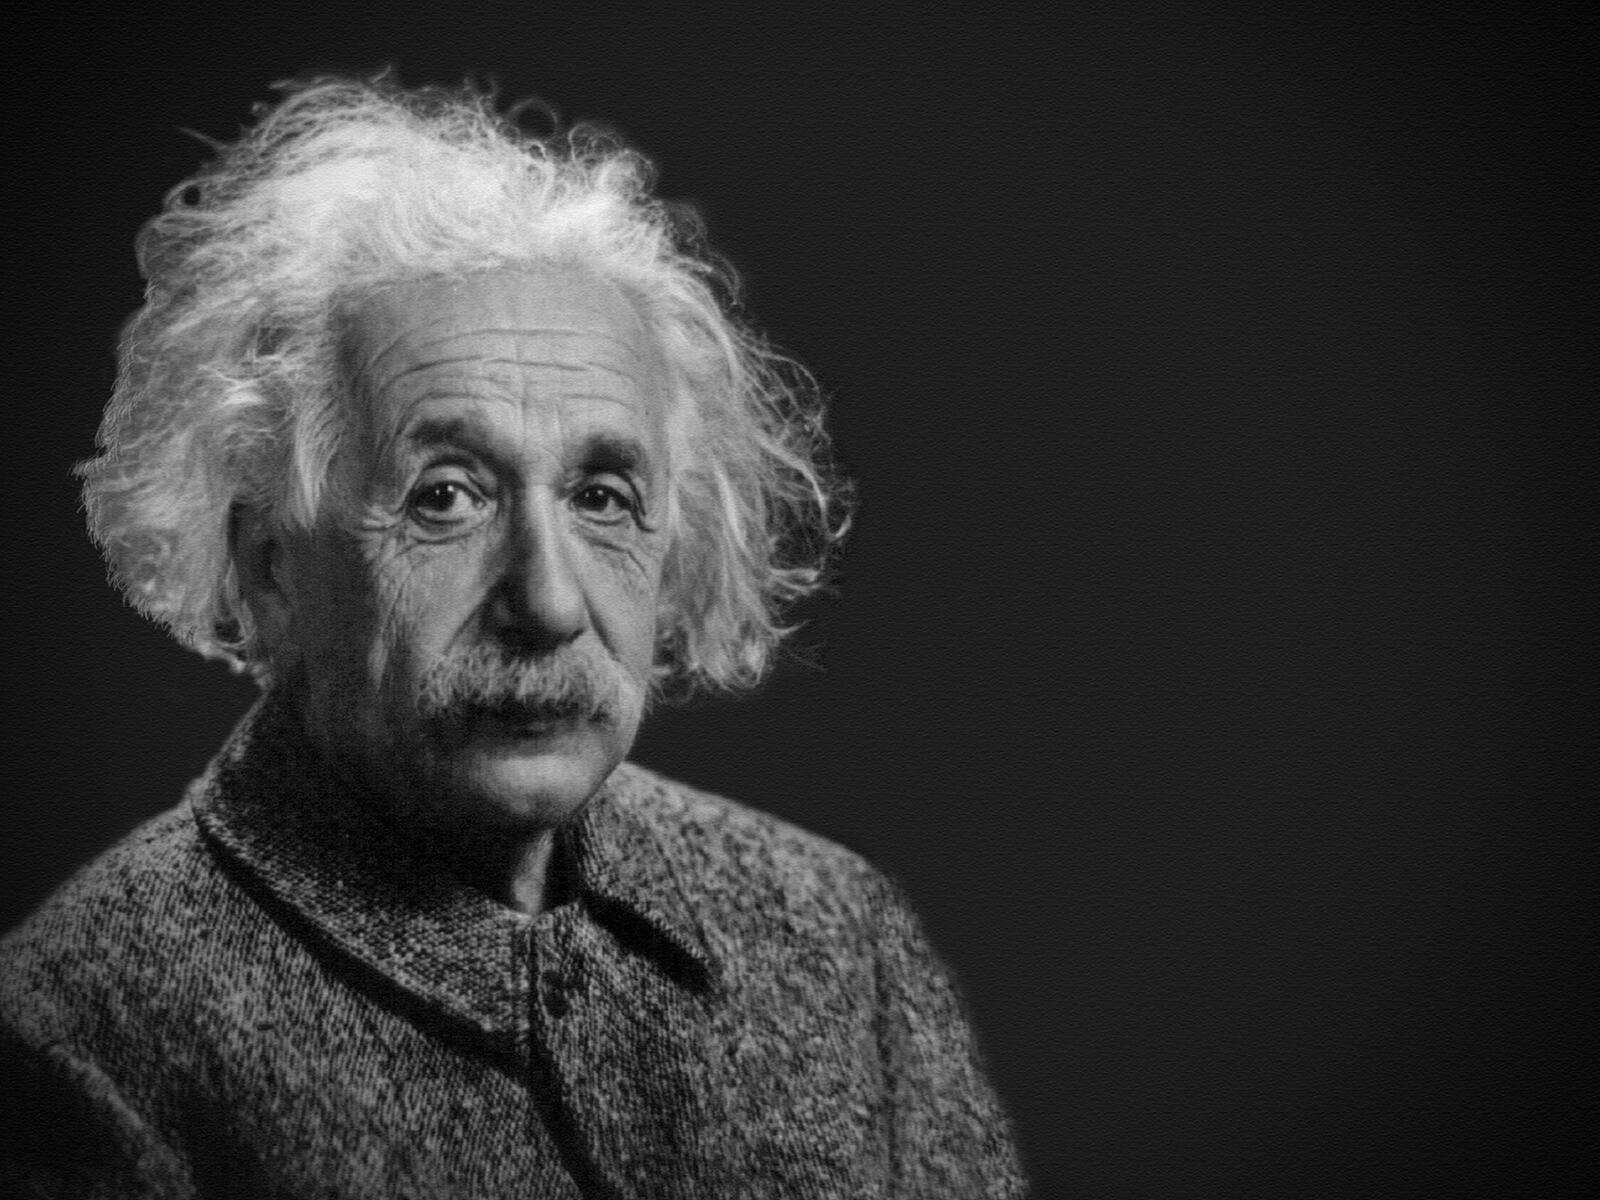 Wallpapers vintage face Albert Einstein on the desktop